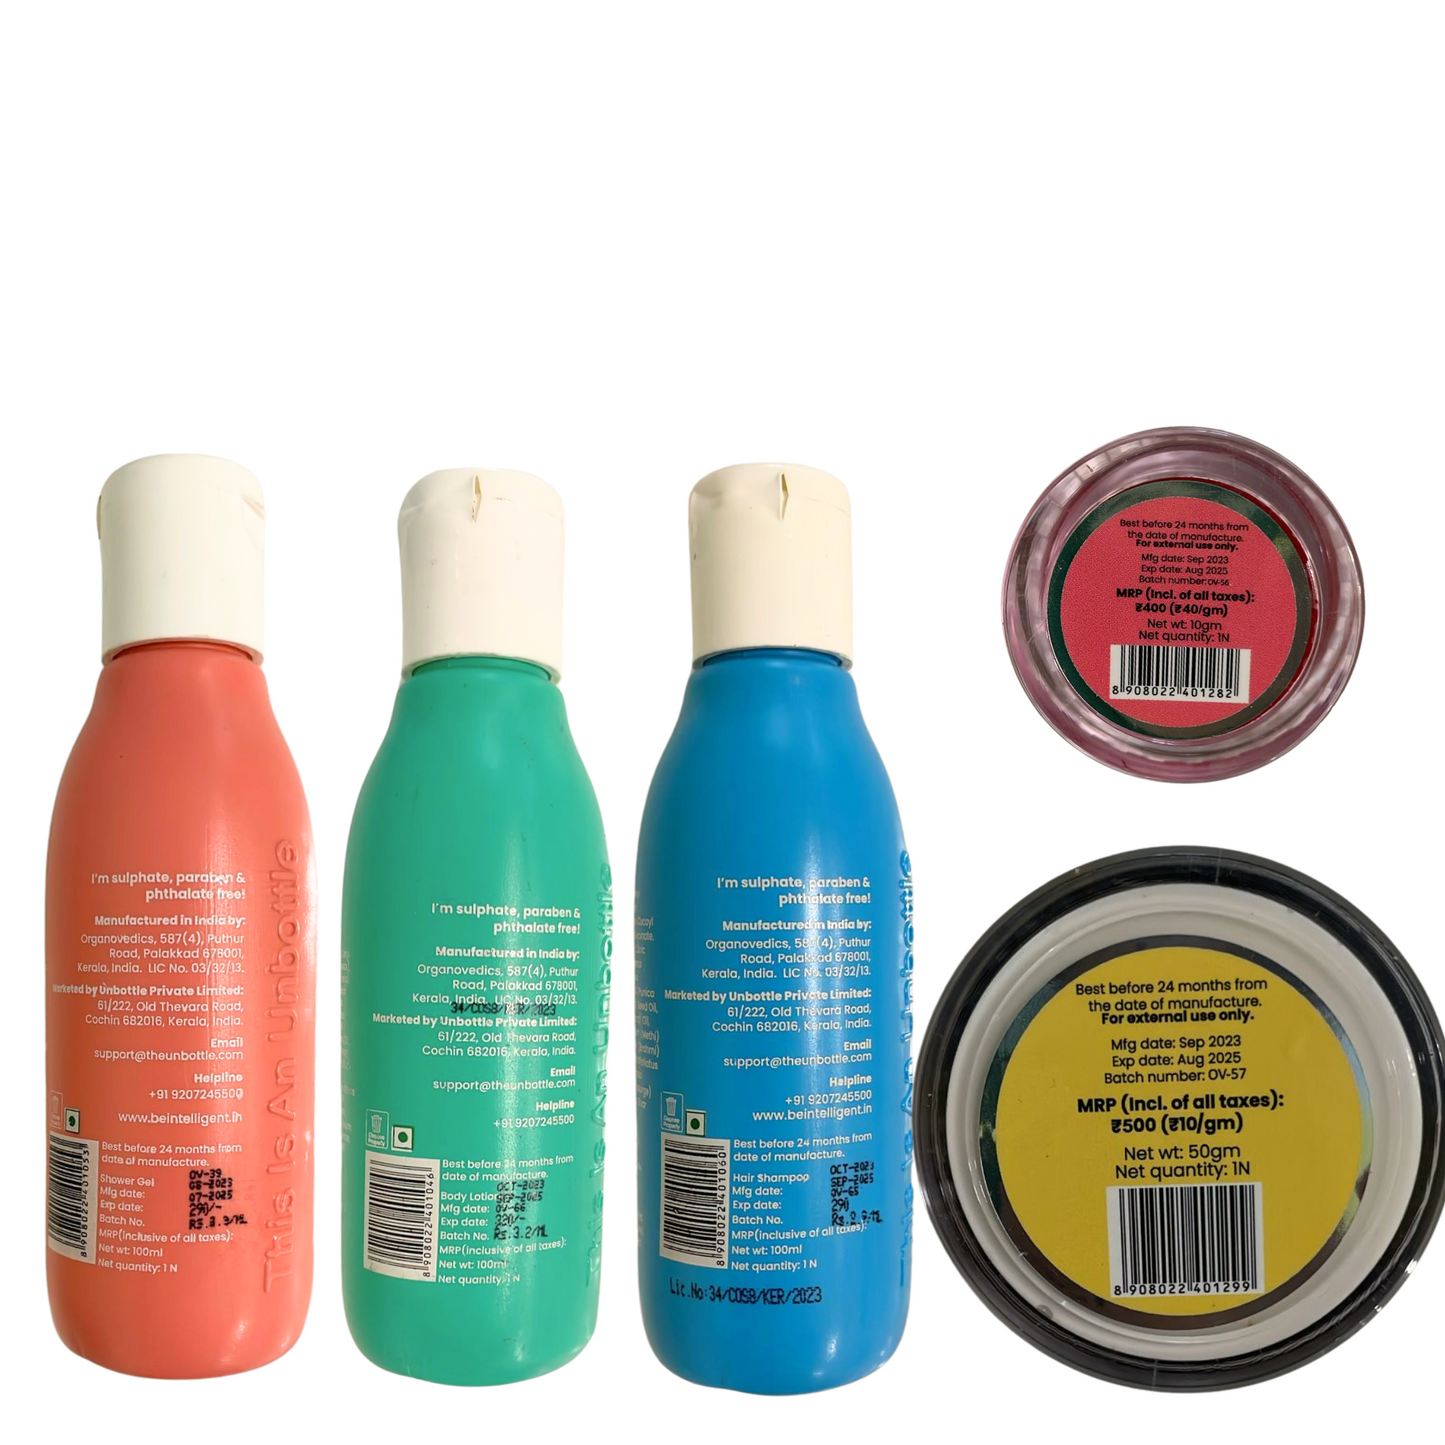 Lotion 100ml + Shampoo 100ml + Shower gel 100ml + Sunscreen 50gm - special price